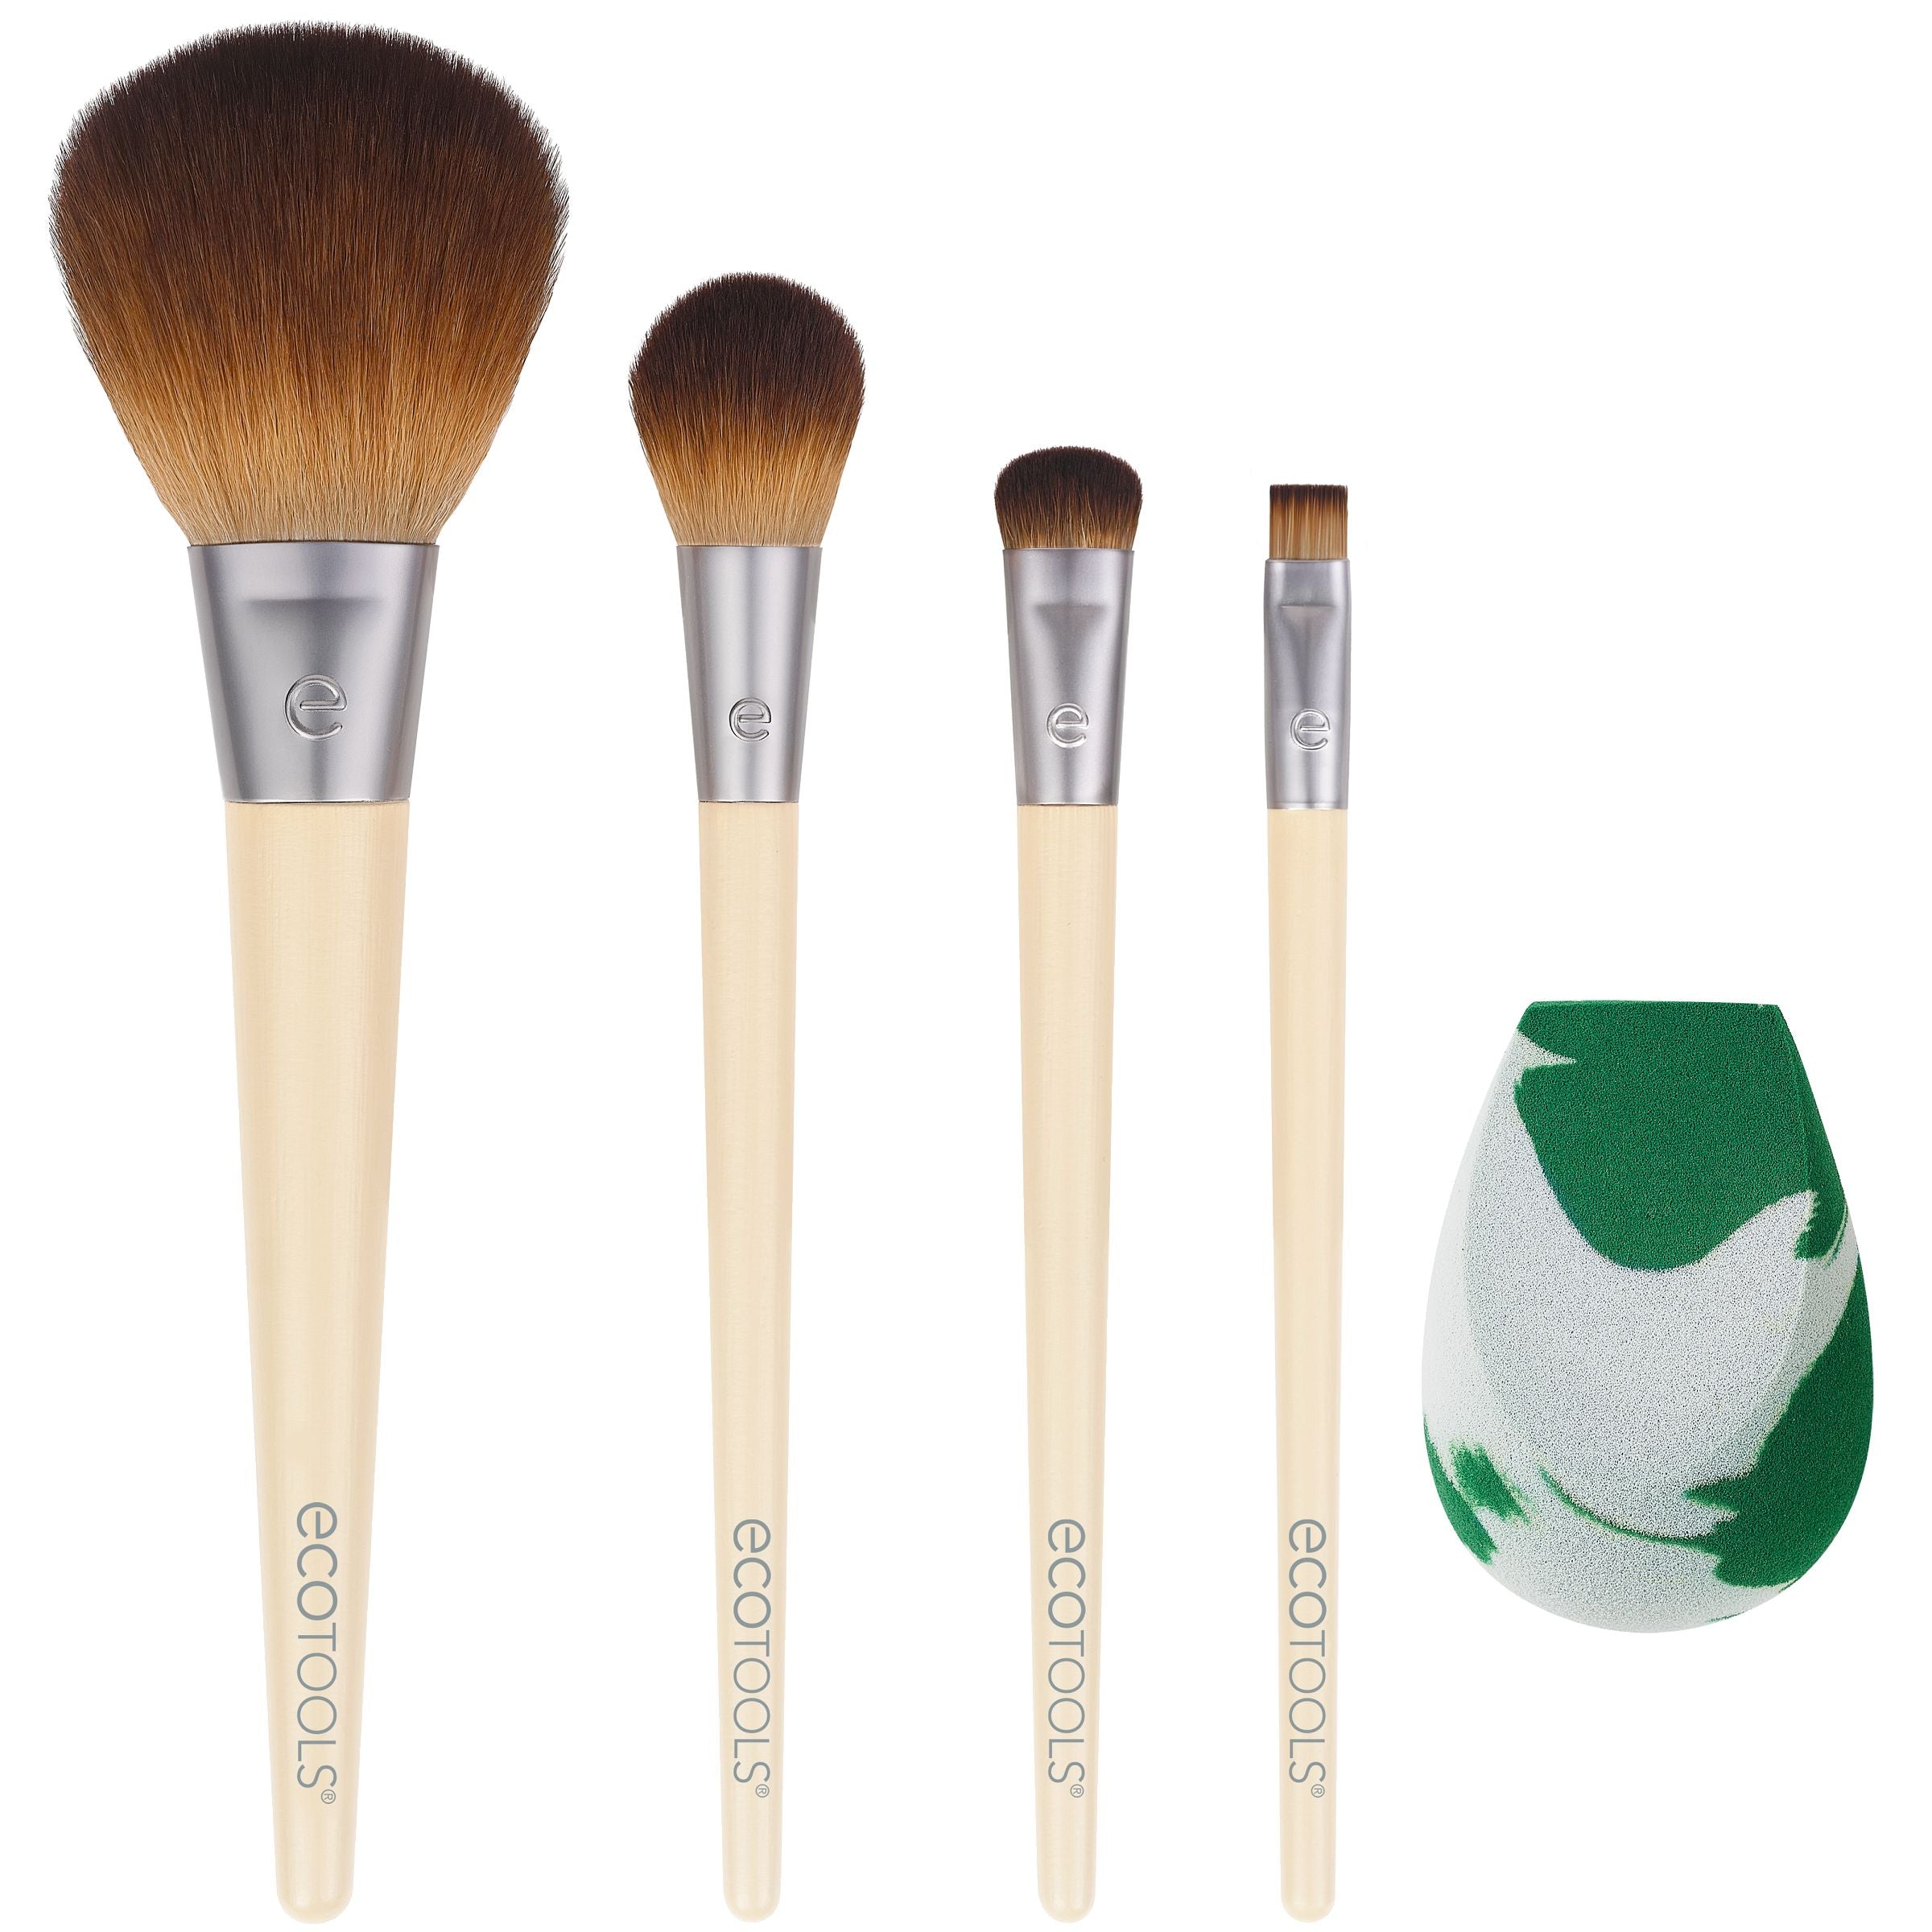 EcoTools Core Five Makeup Brush and Sponge Kit, For Eyeshadow